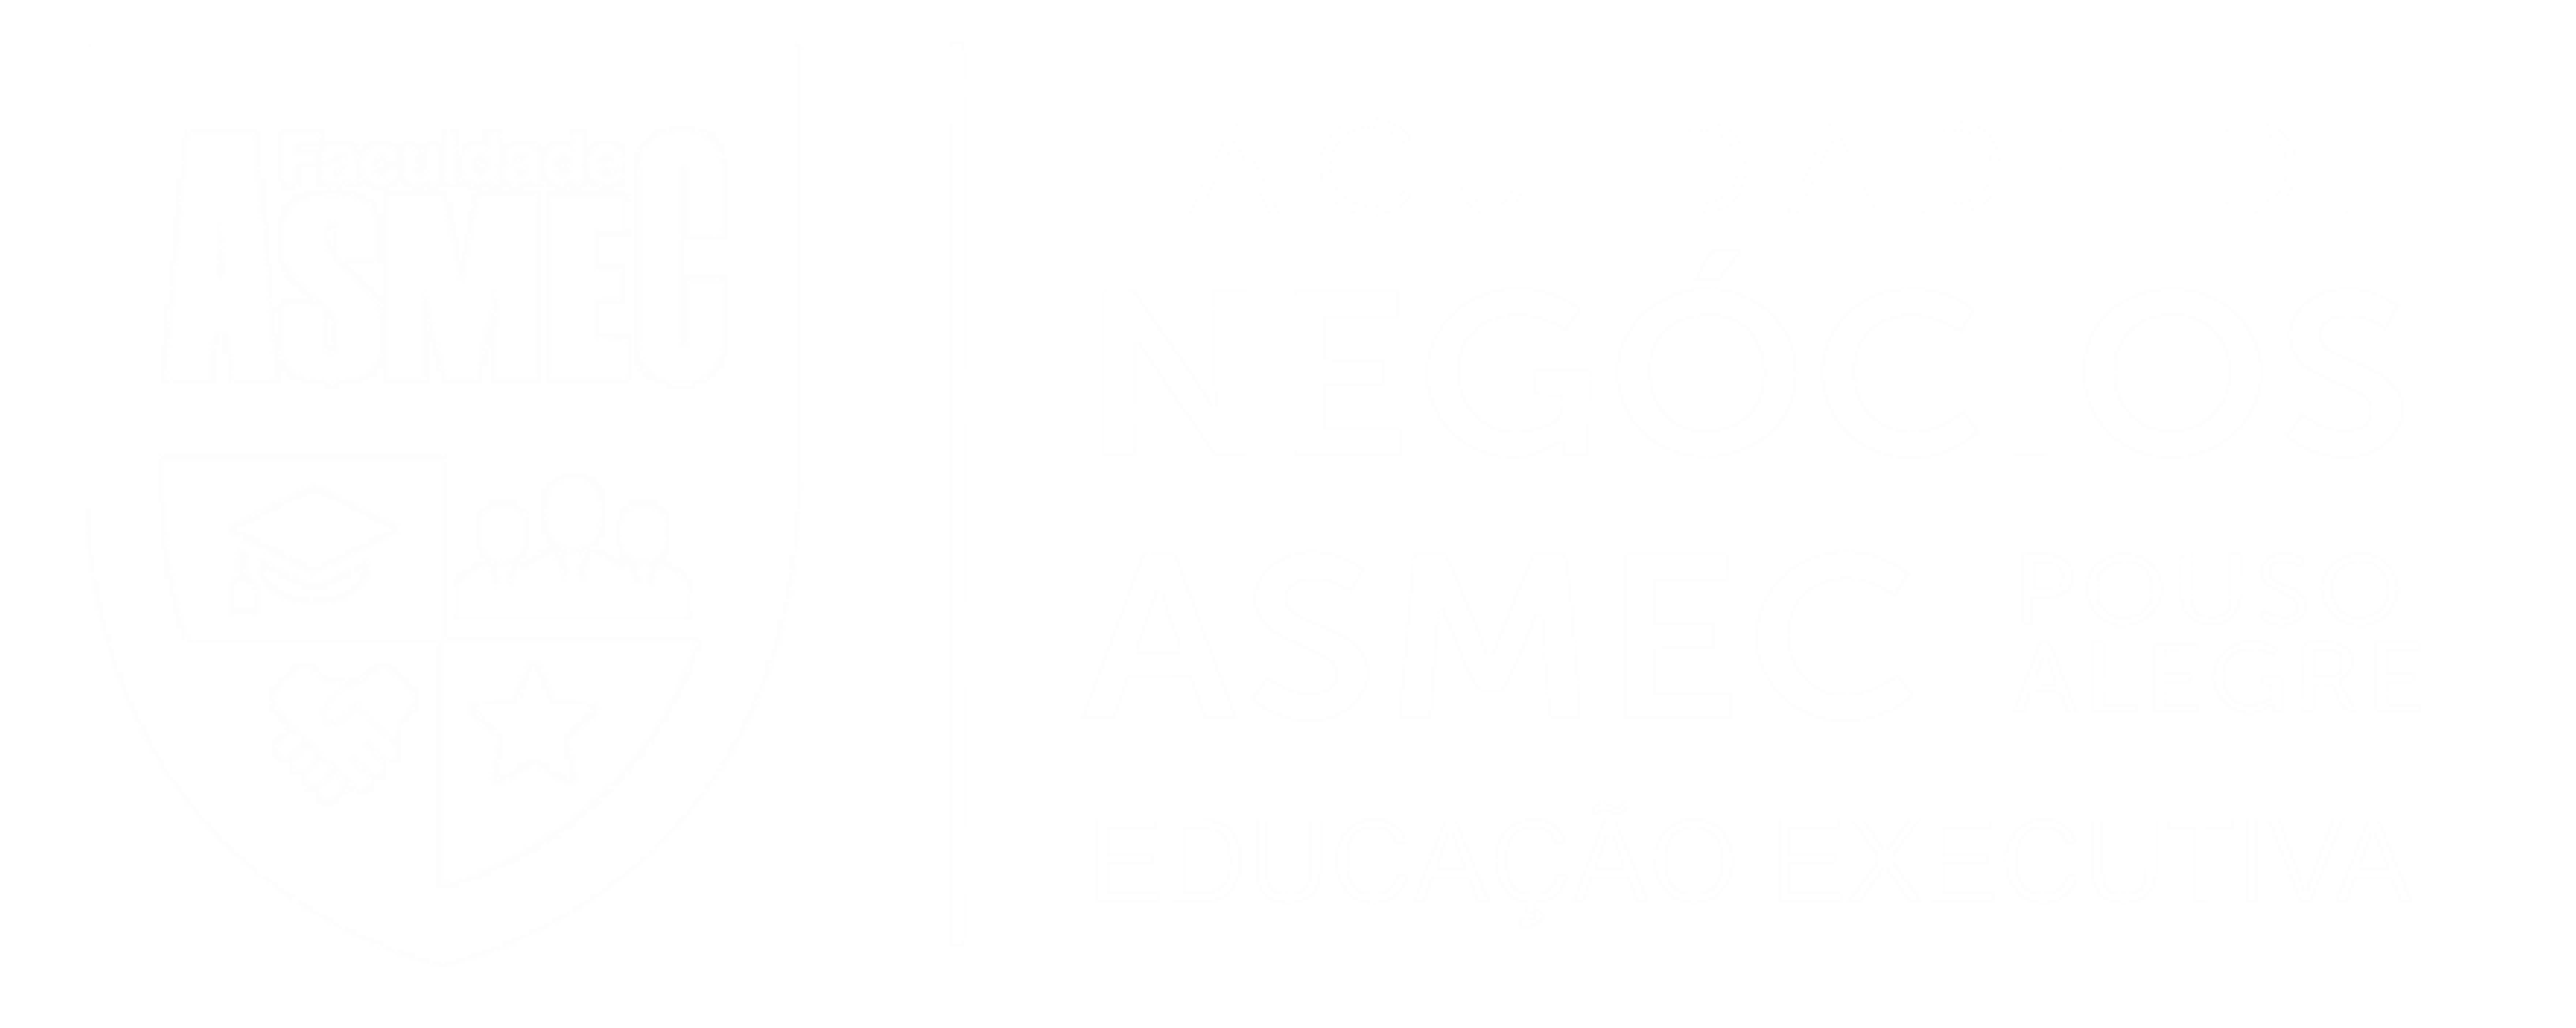 Unisepe Educacional | https://portal.unisepe.com.br/asmecpa/?vestibular=true